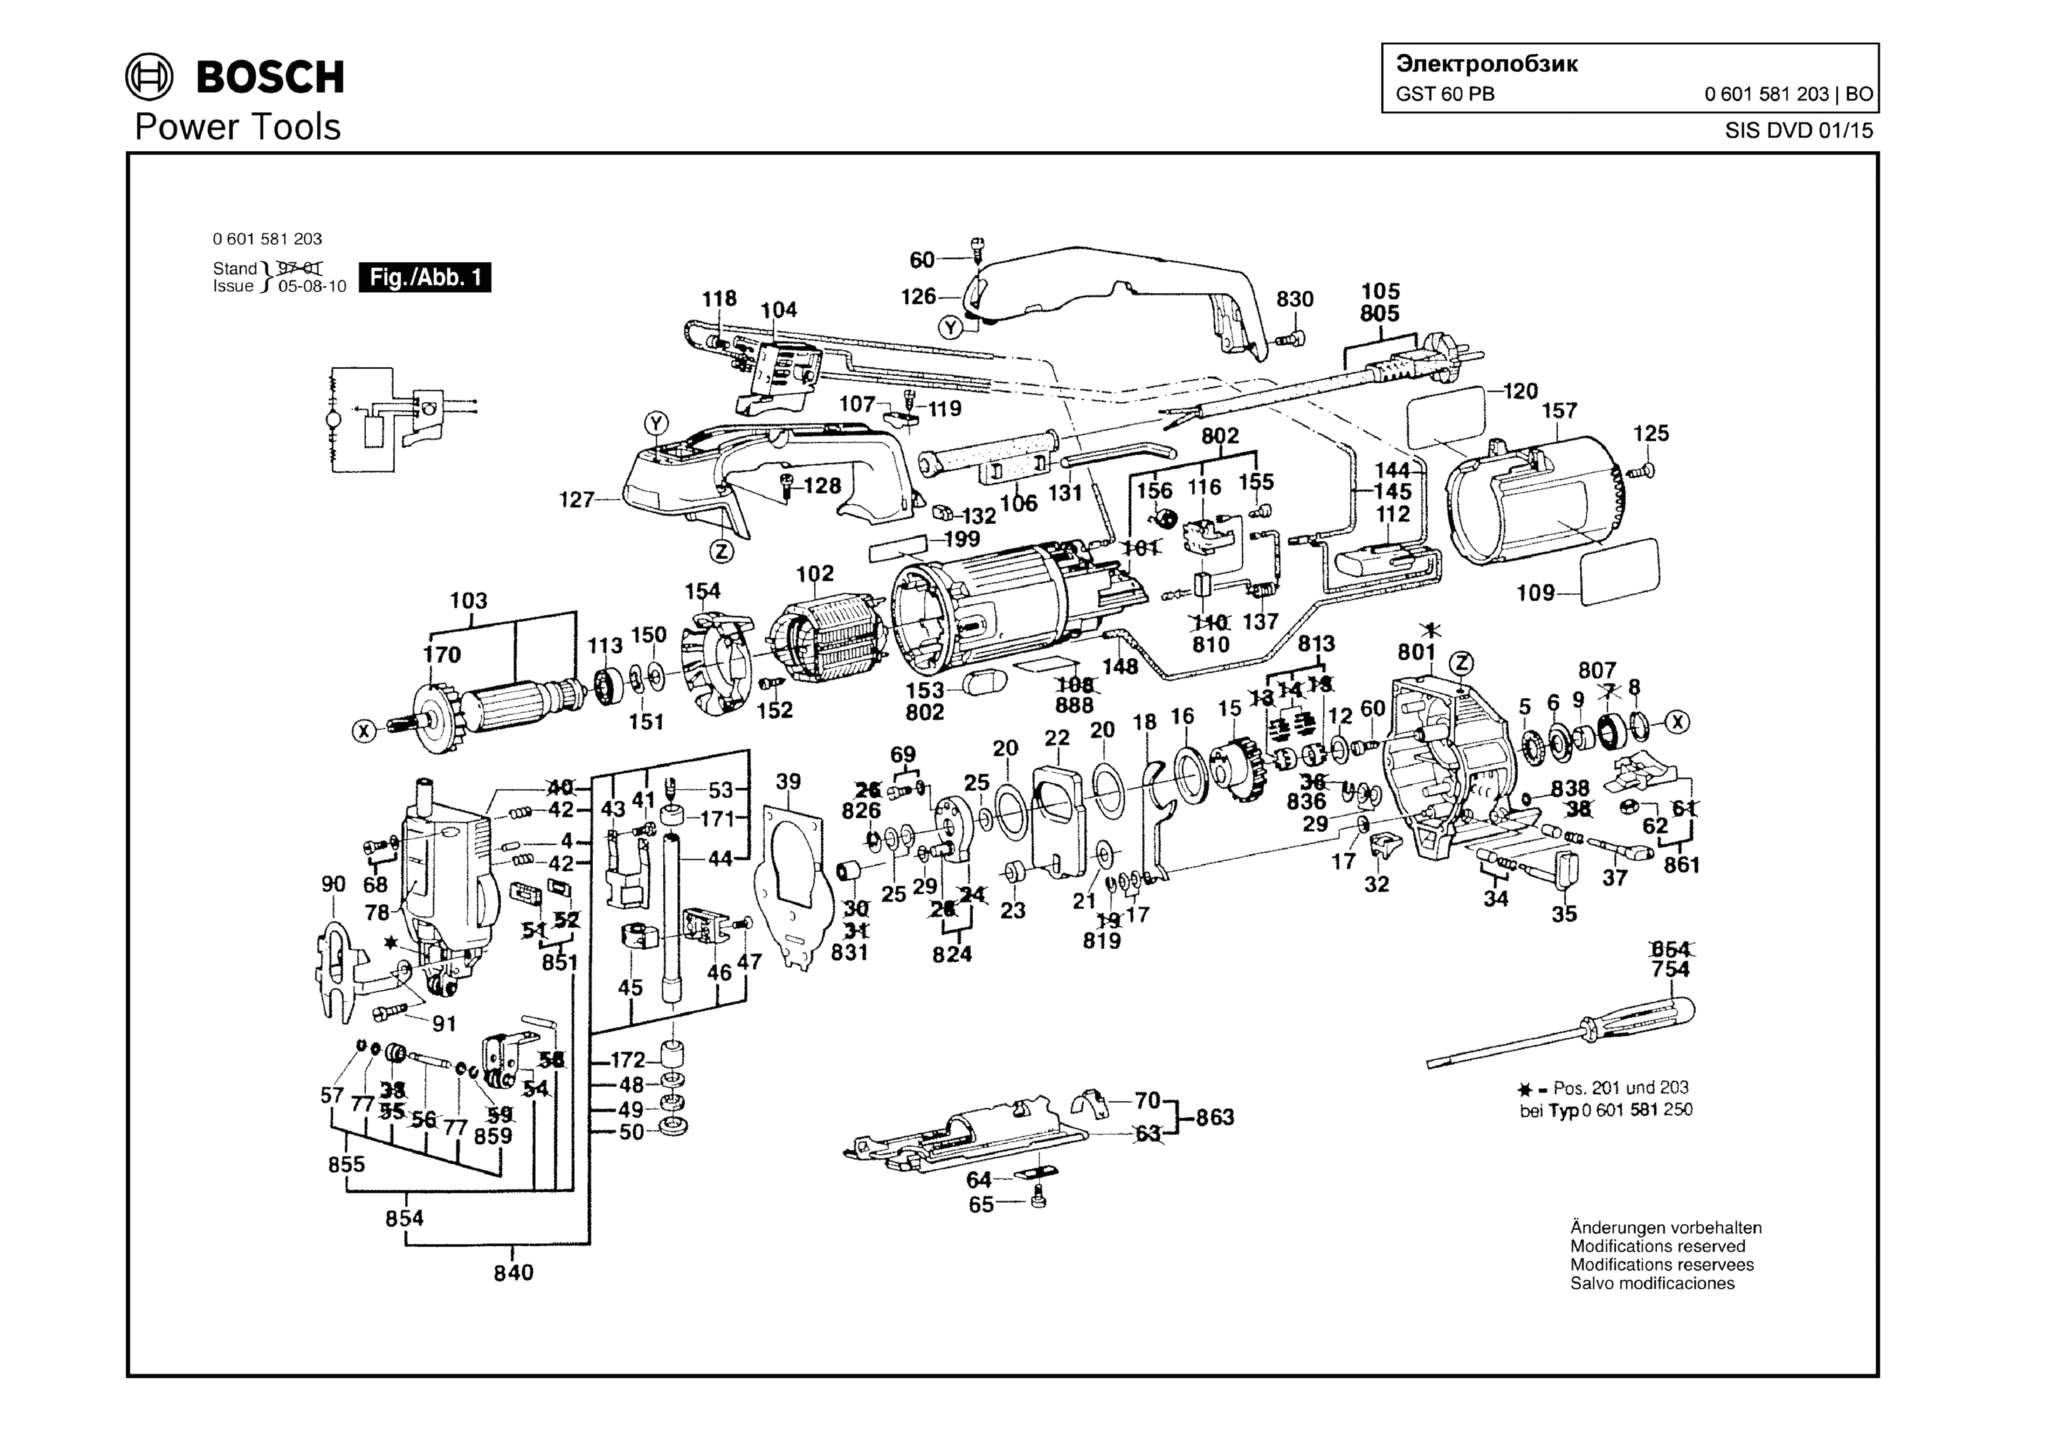 Запчасти, схема и деталировка Bosch GST 60 PB (ТИП 0601581203)